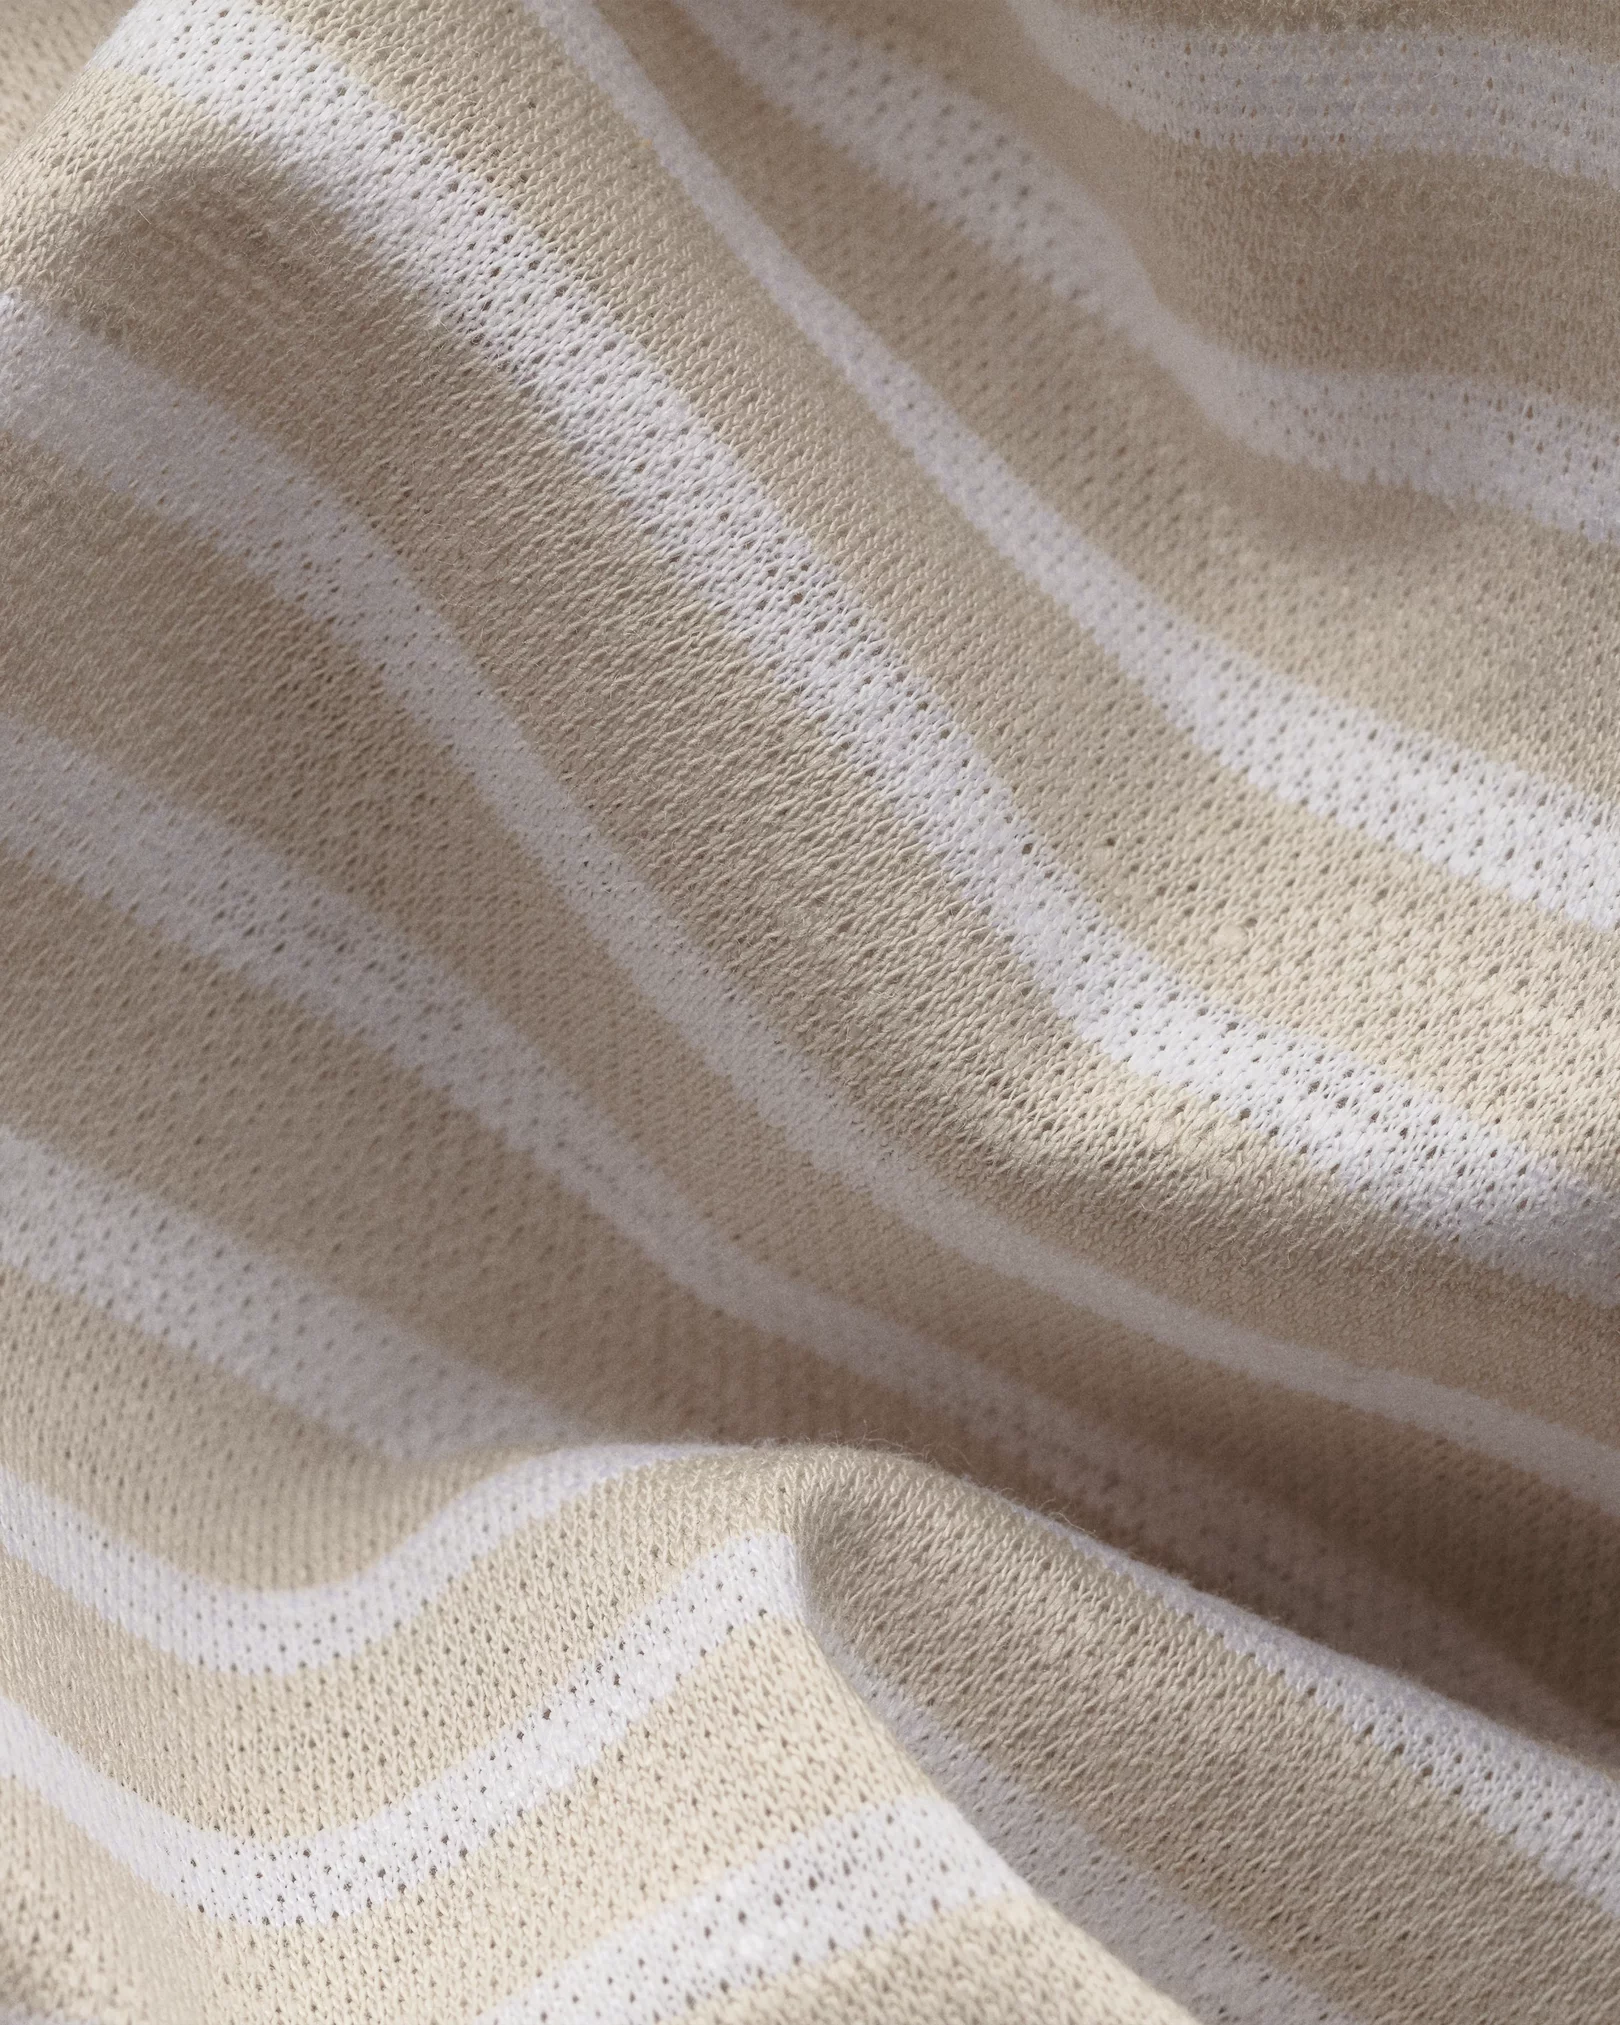 Eton - off white striped cotton linen polo shirt short